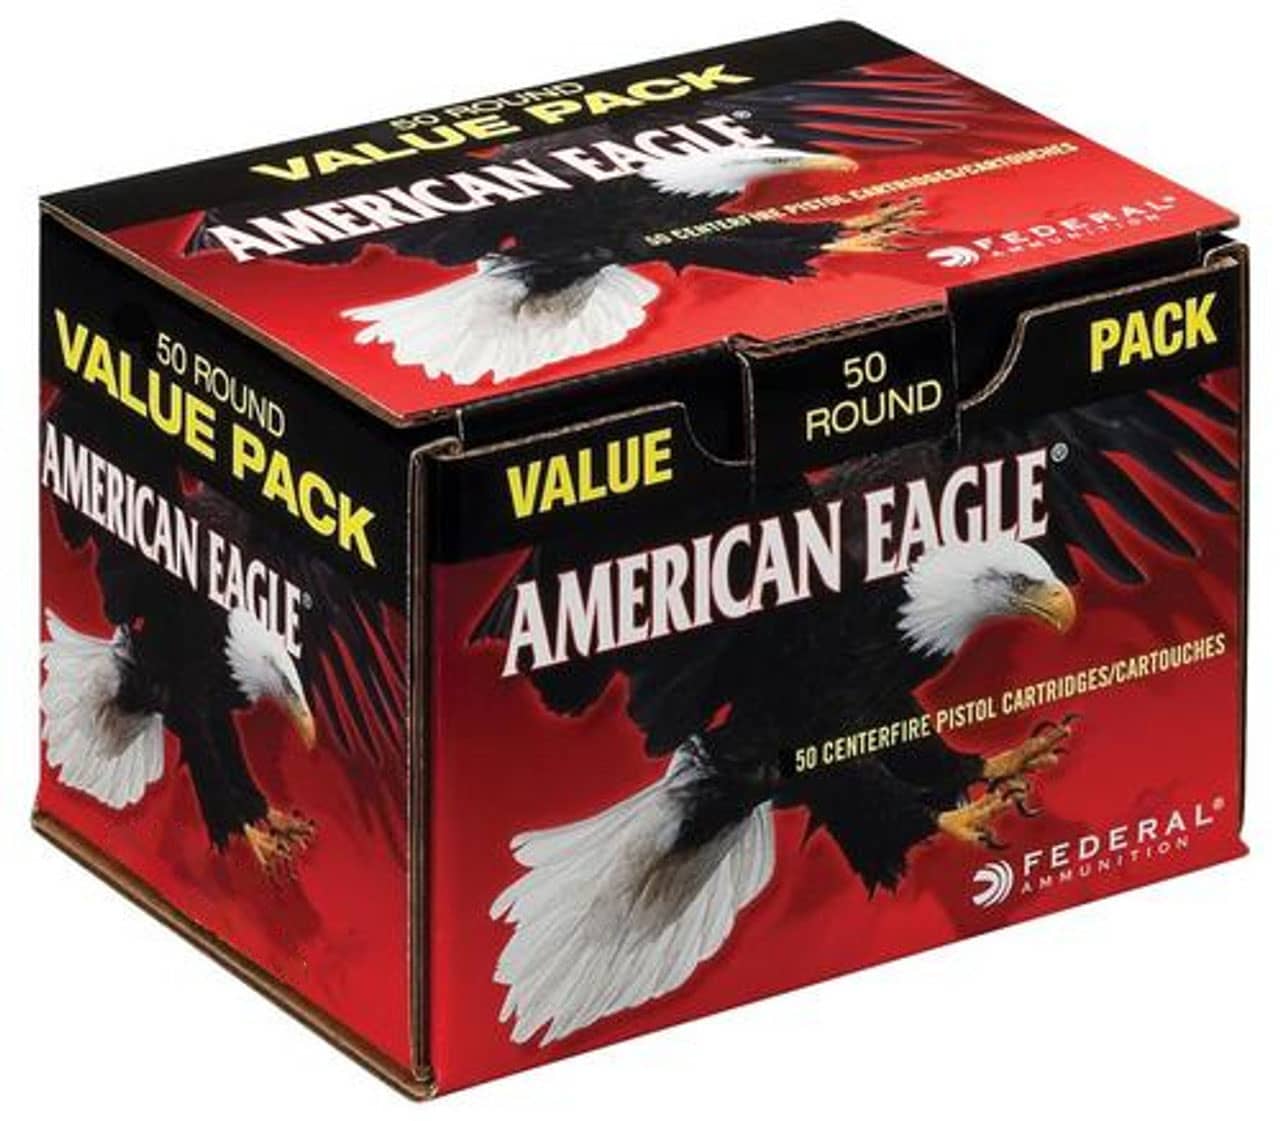 Federal® American Eagle™ Centerfire Pistol Ammunition